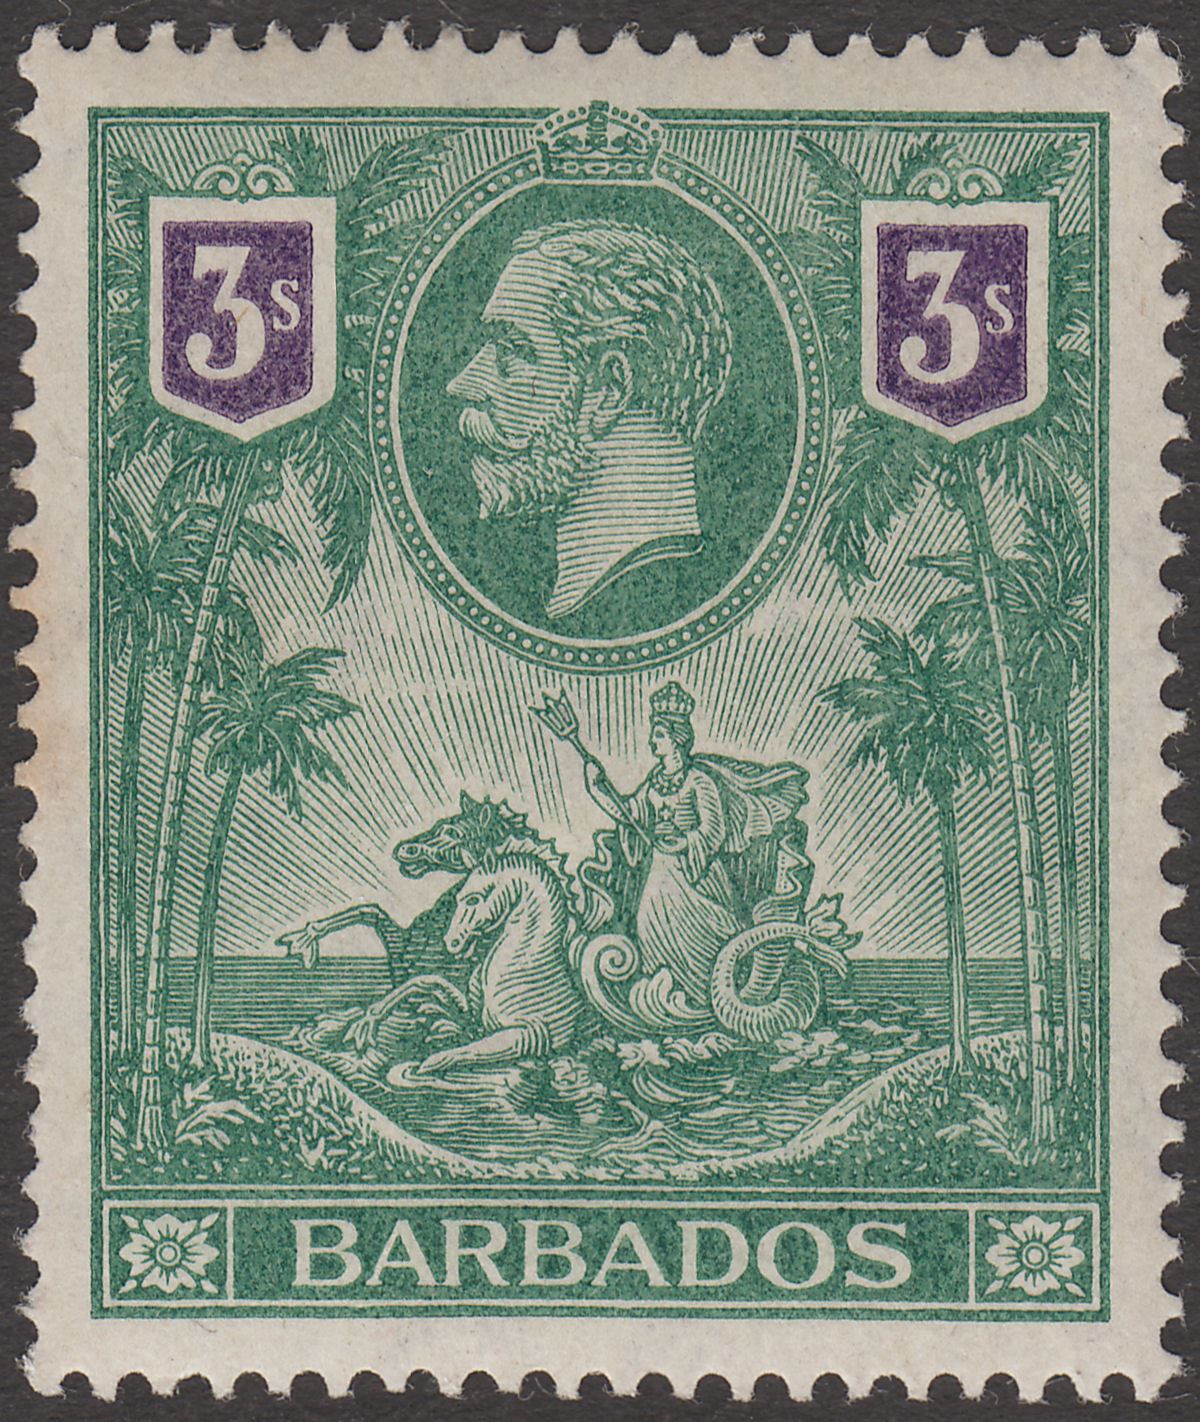 1 mark each. Марка Гватемала и Барбадоса. Что такое Гватемала и Барбадос. Барбадос марка. Почтовые марки Гватемалы и Барбадоса.